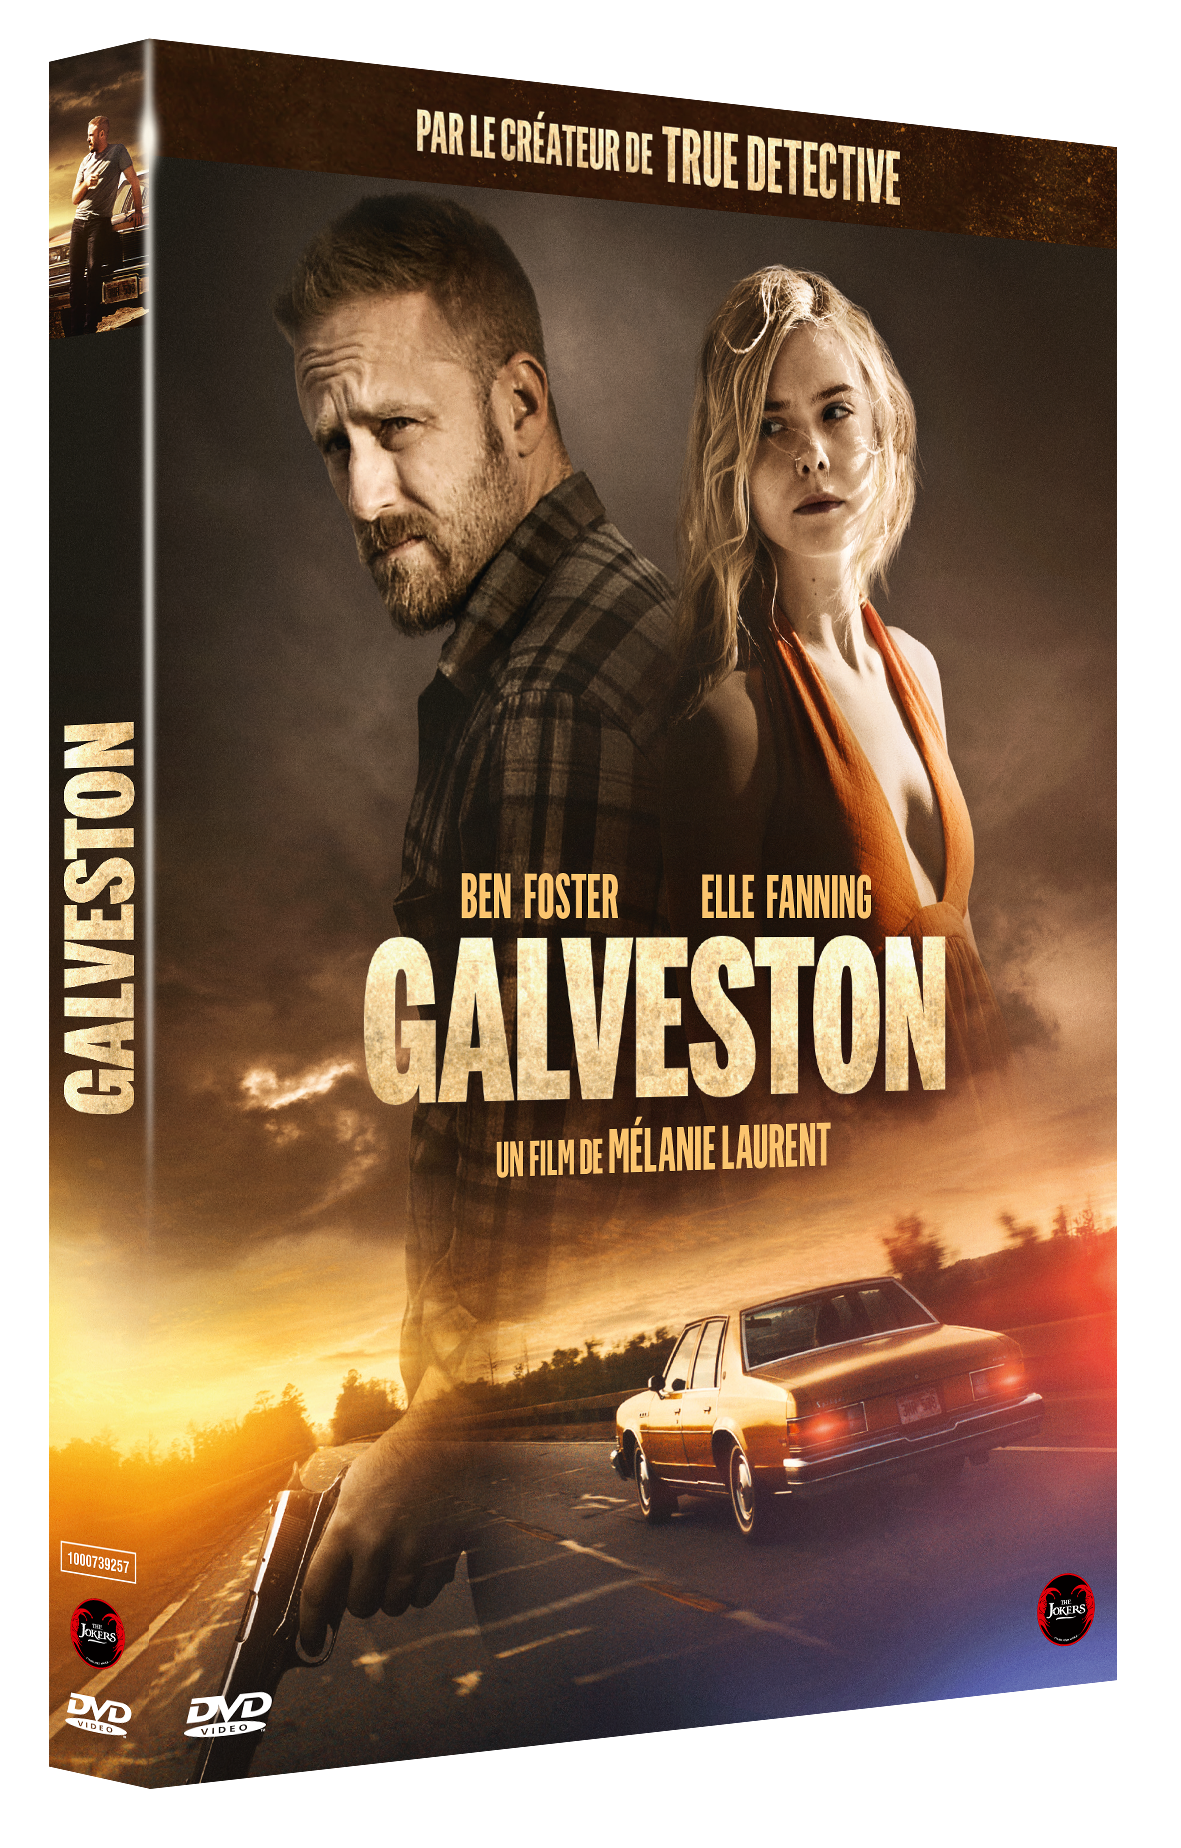 DVD "Galveston"